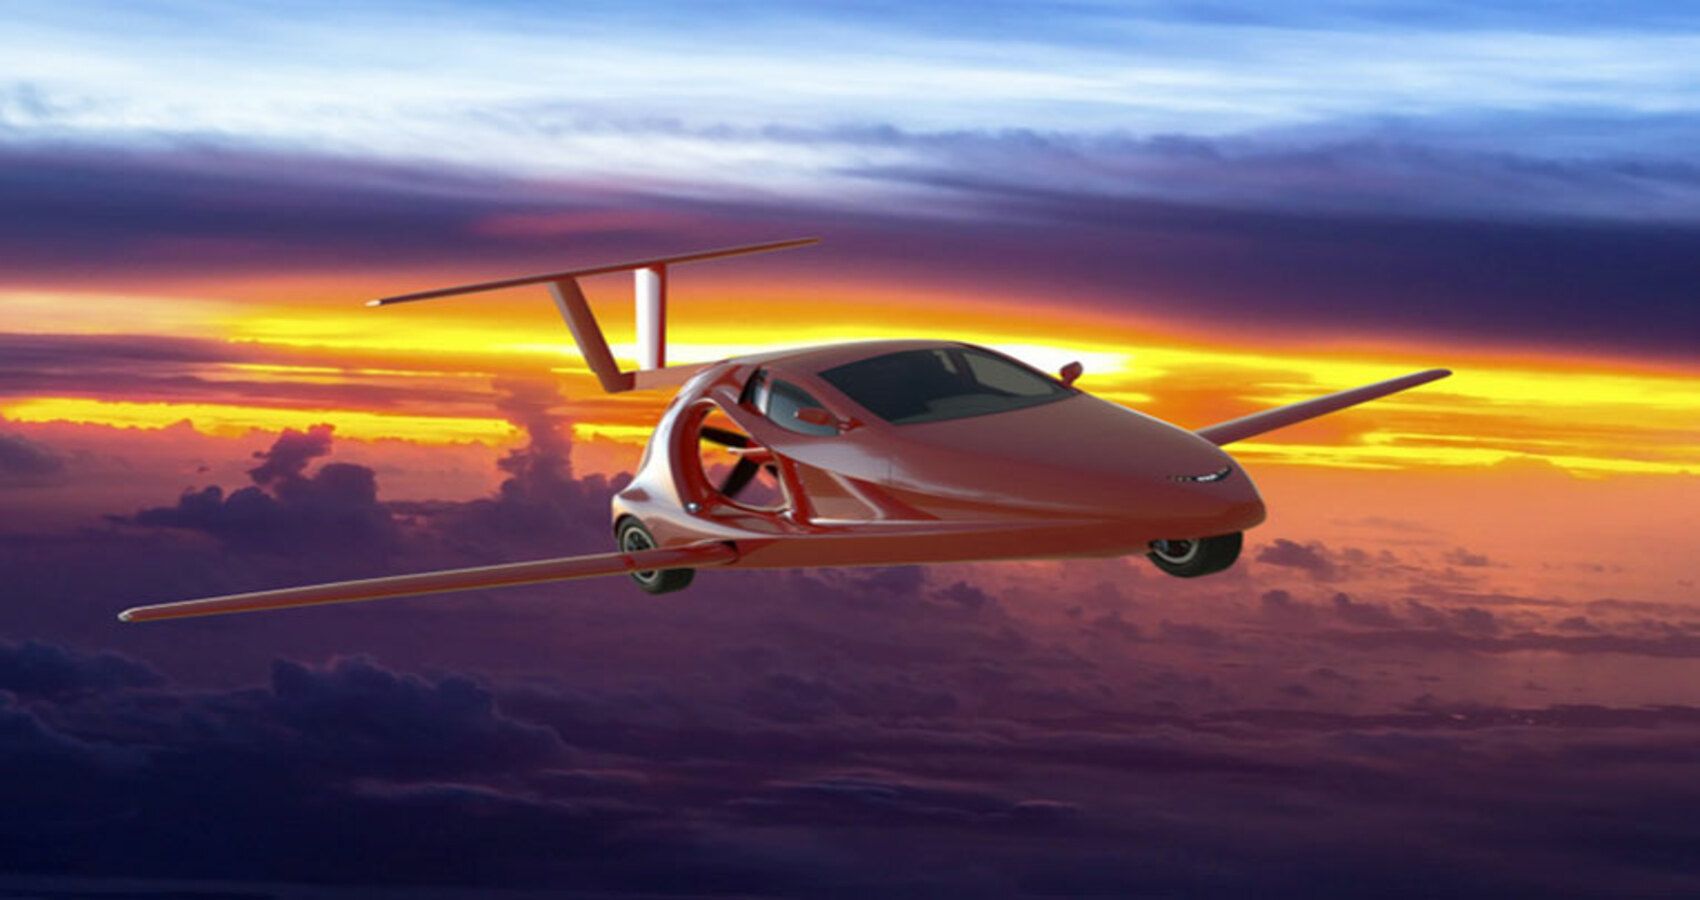 Samson Sky's Switchblade Flying Car 